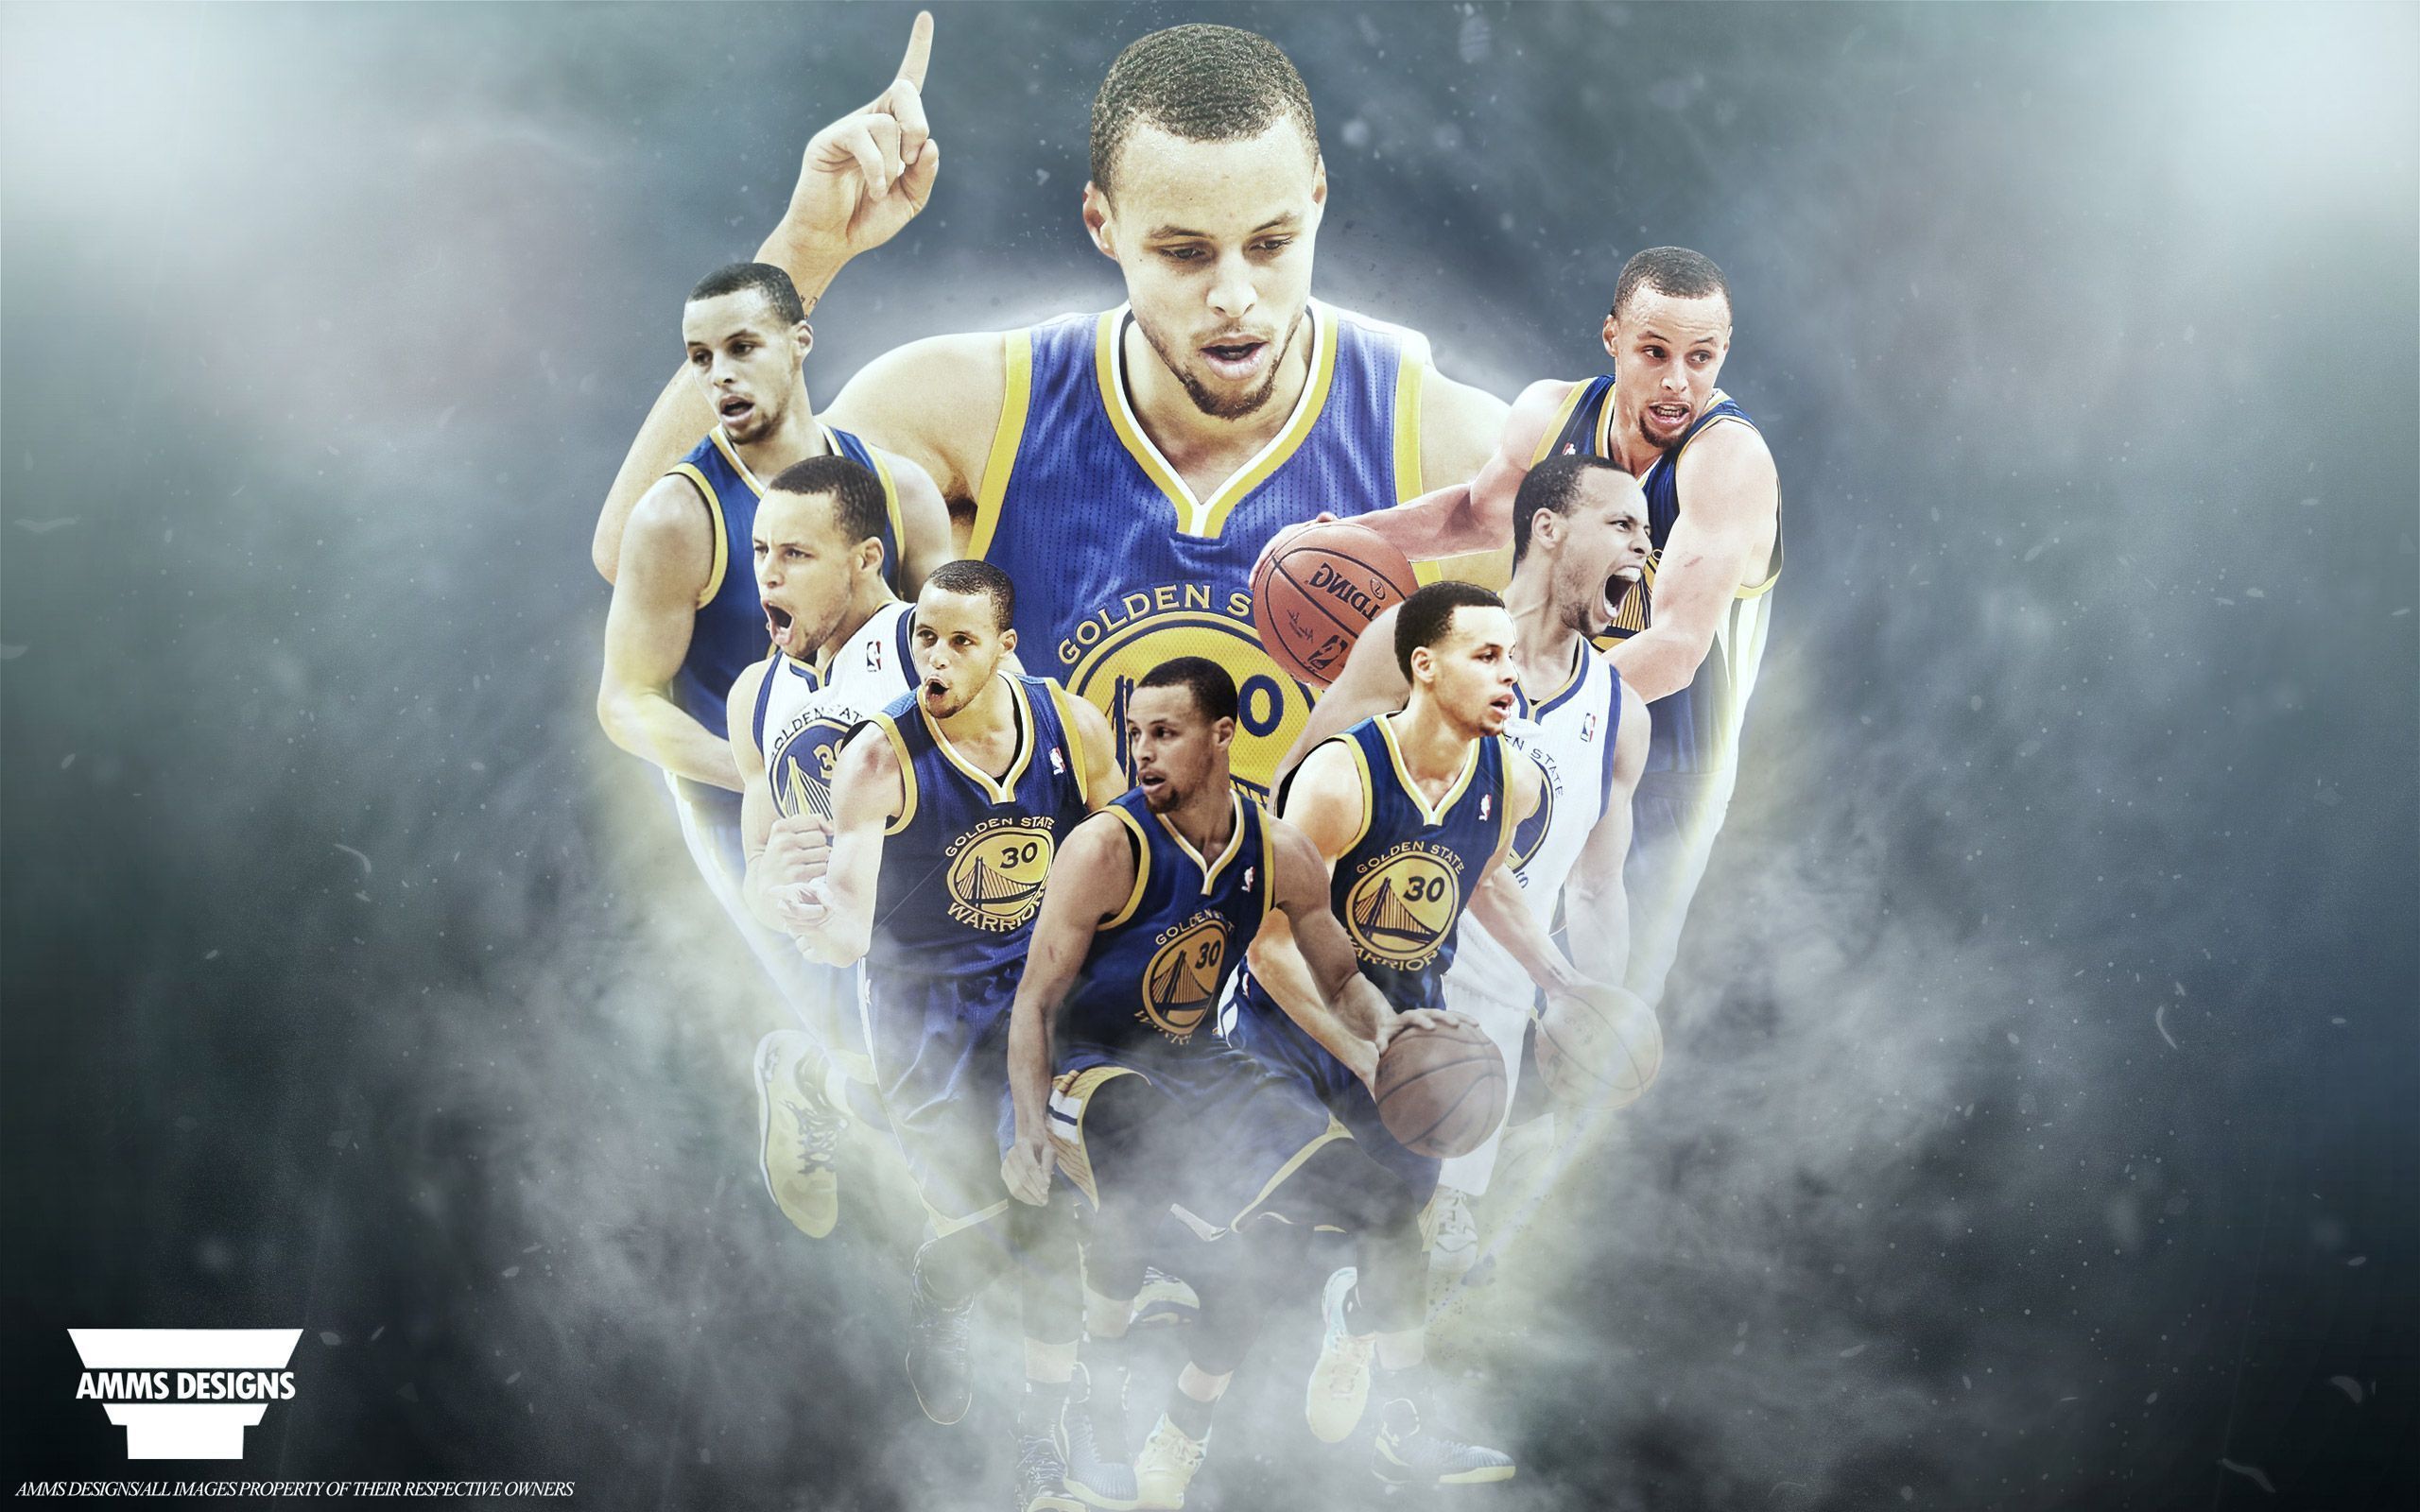 Stephen Curry - NBA Wallpapers and Images - Desktop Nexus Groups